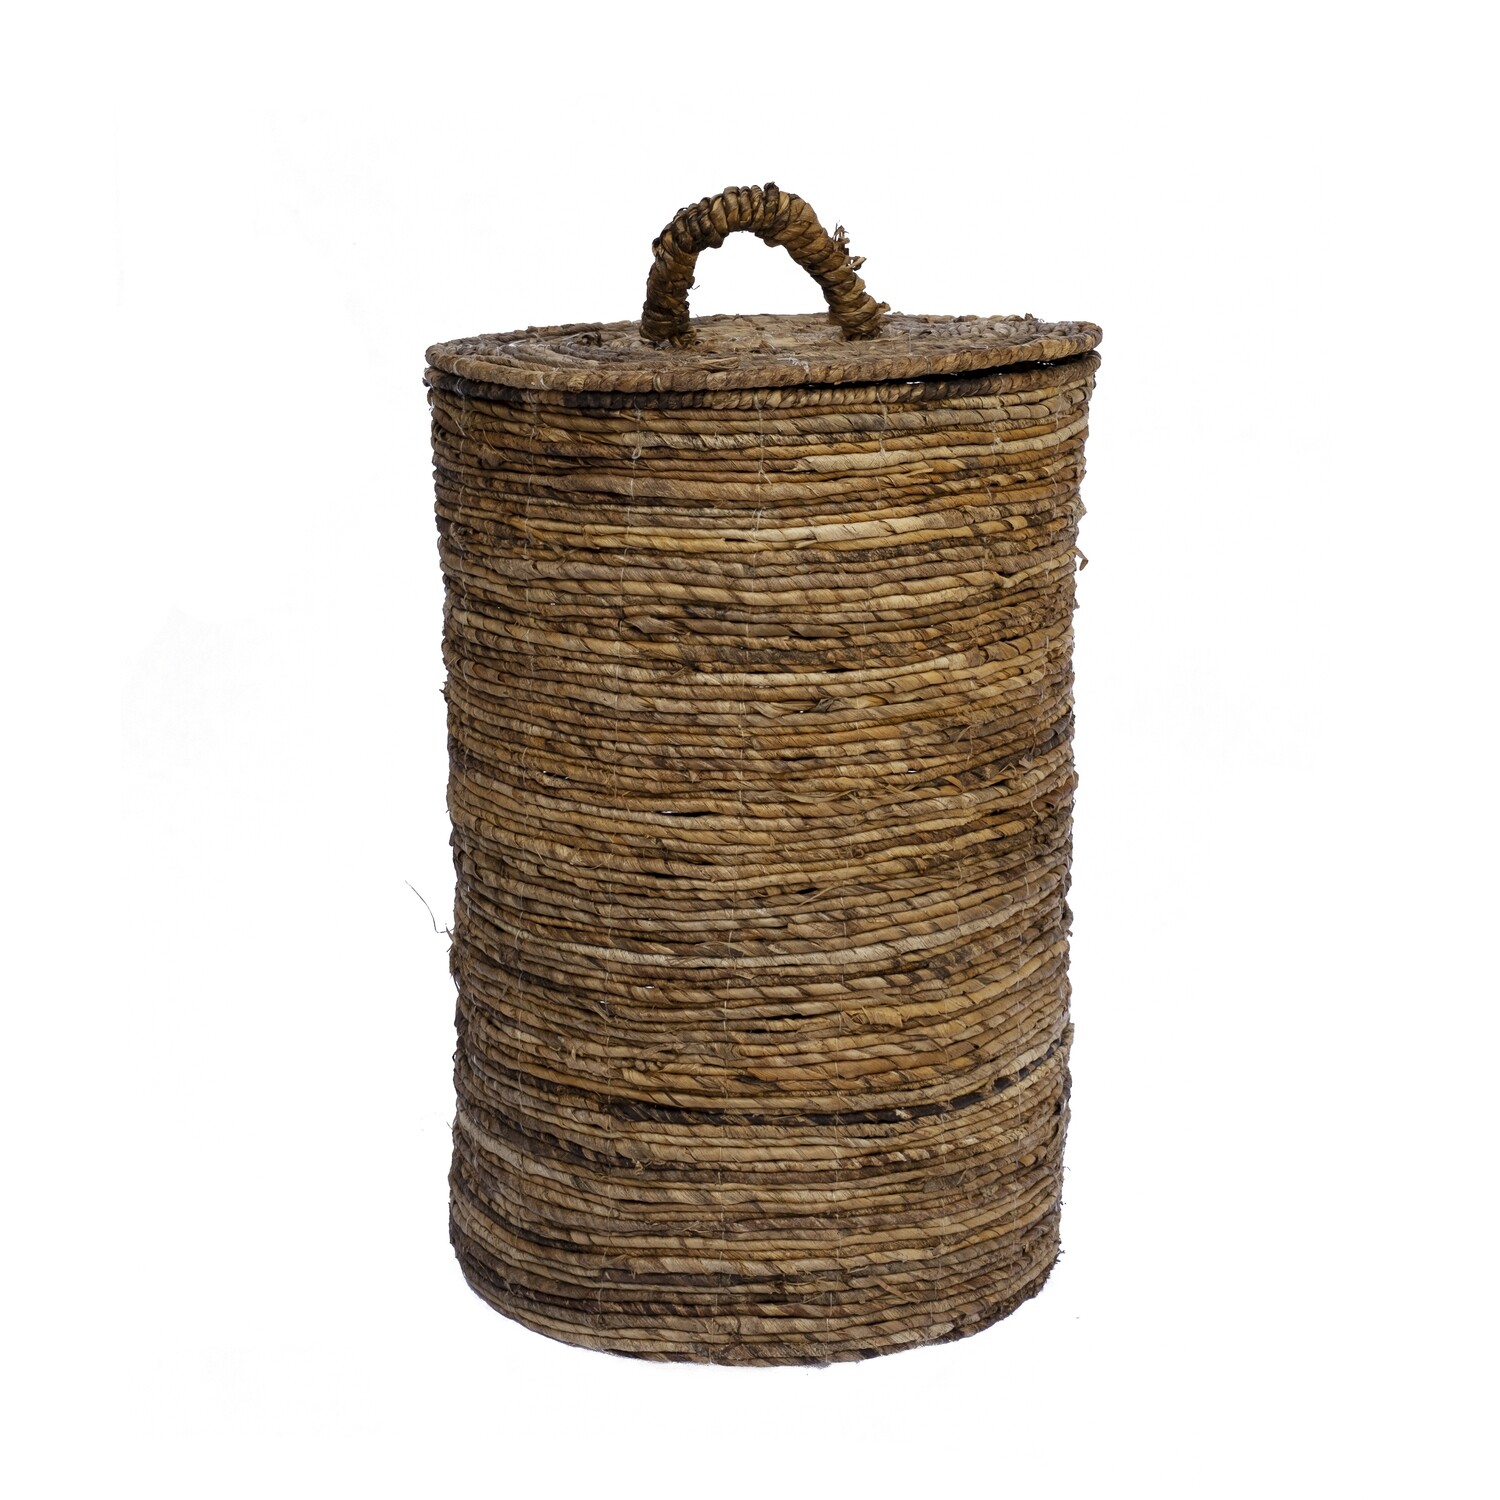 Basket 44 (60cm)